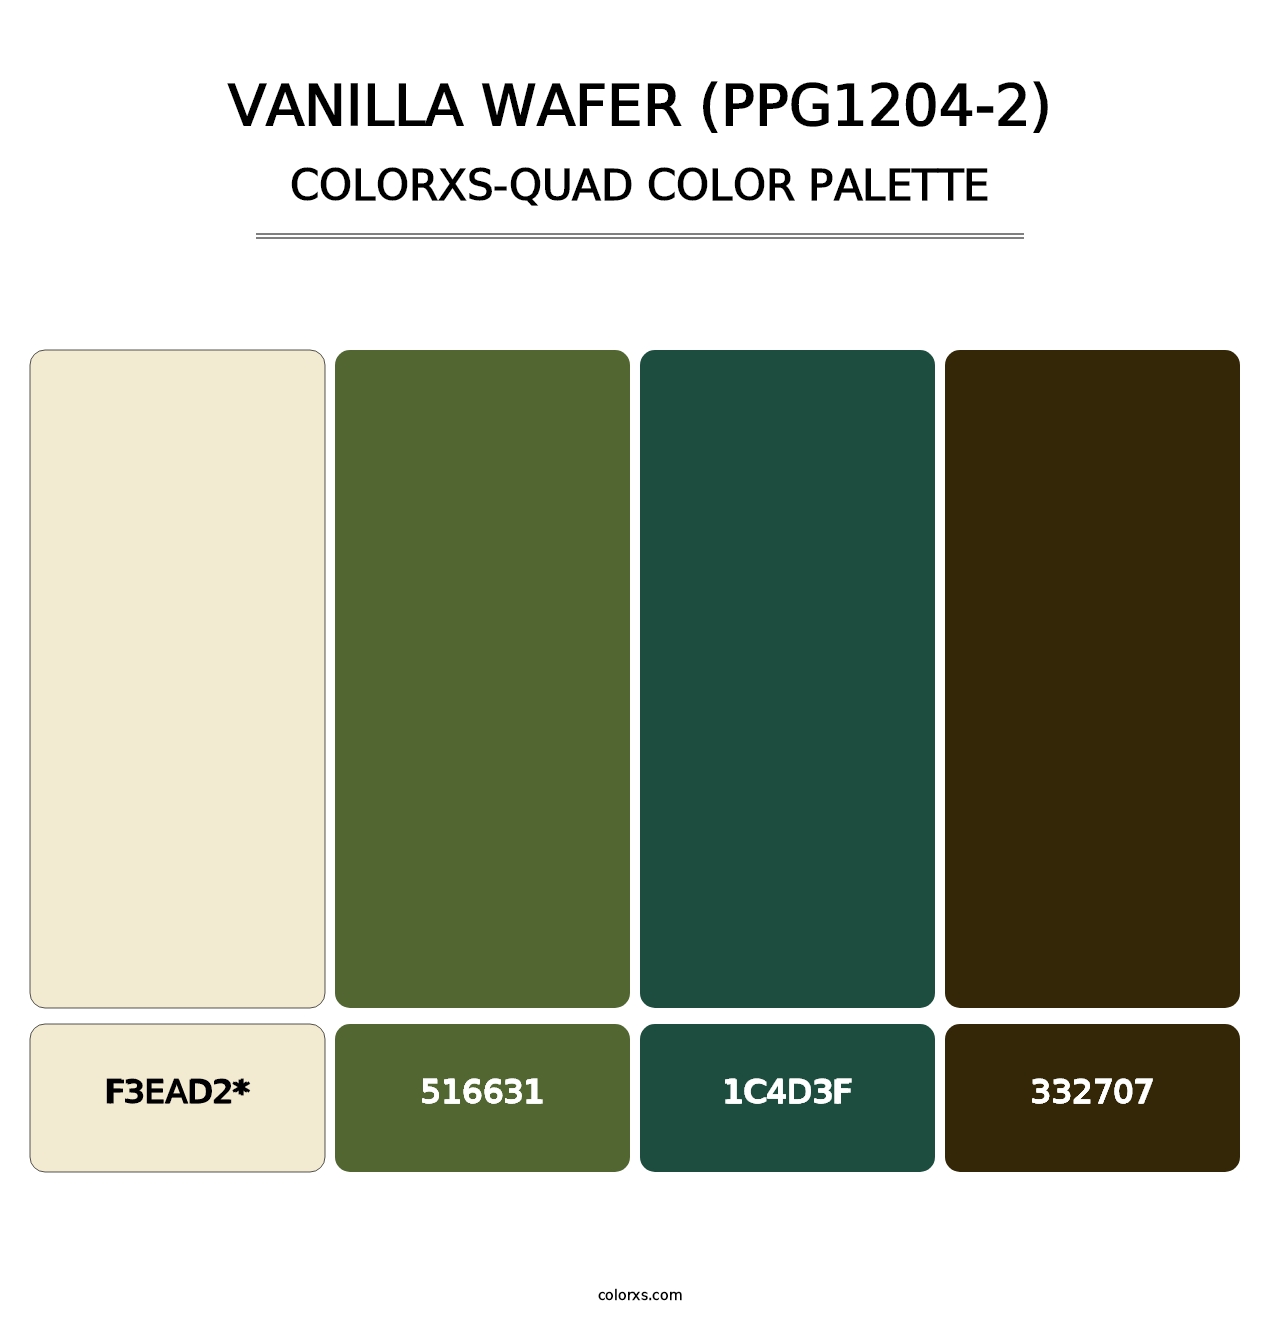 Vanilla Wafer (PPG1204-2) - Colorxs Quad Palette